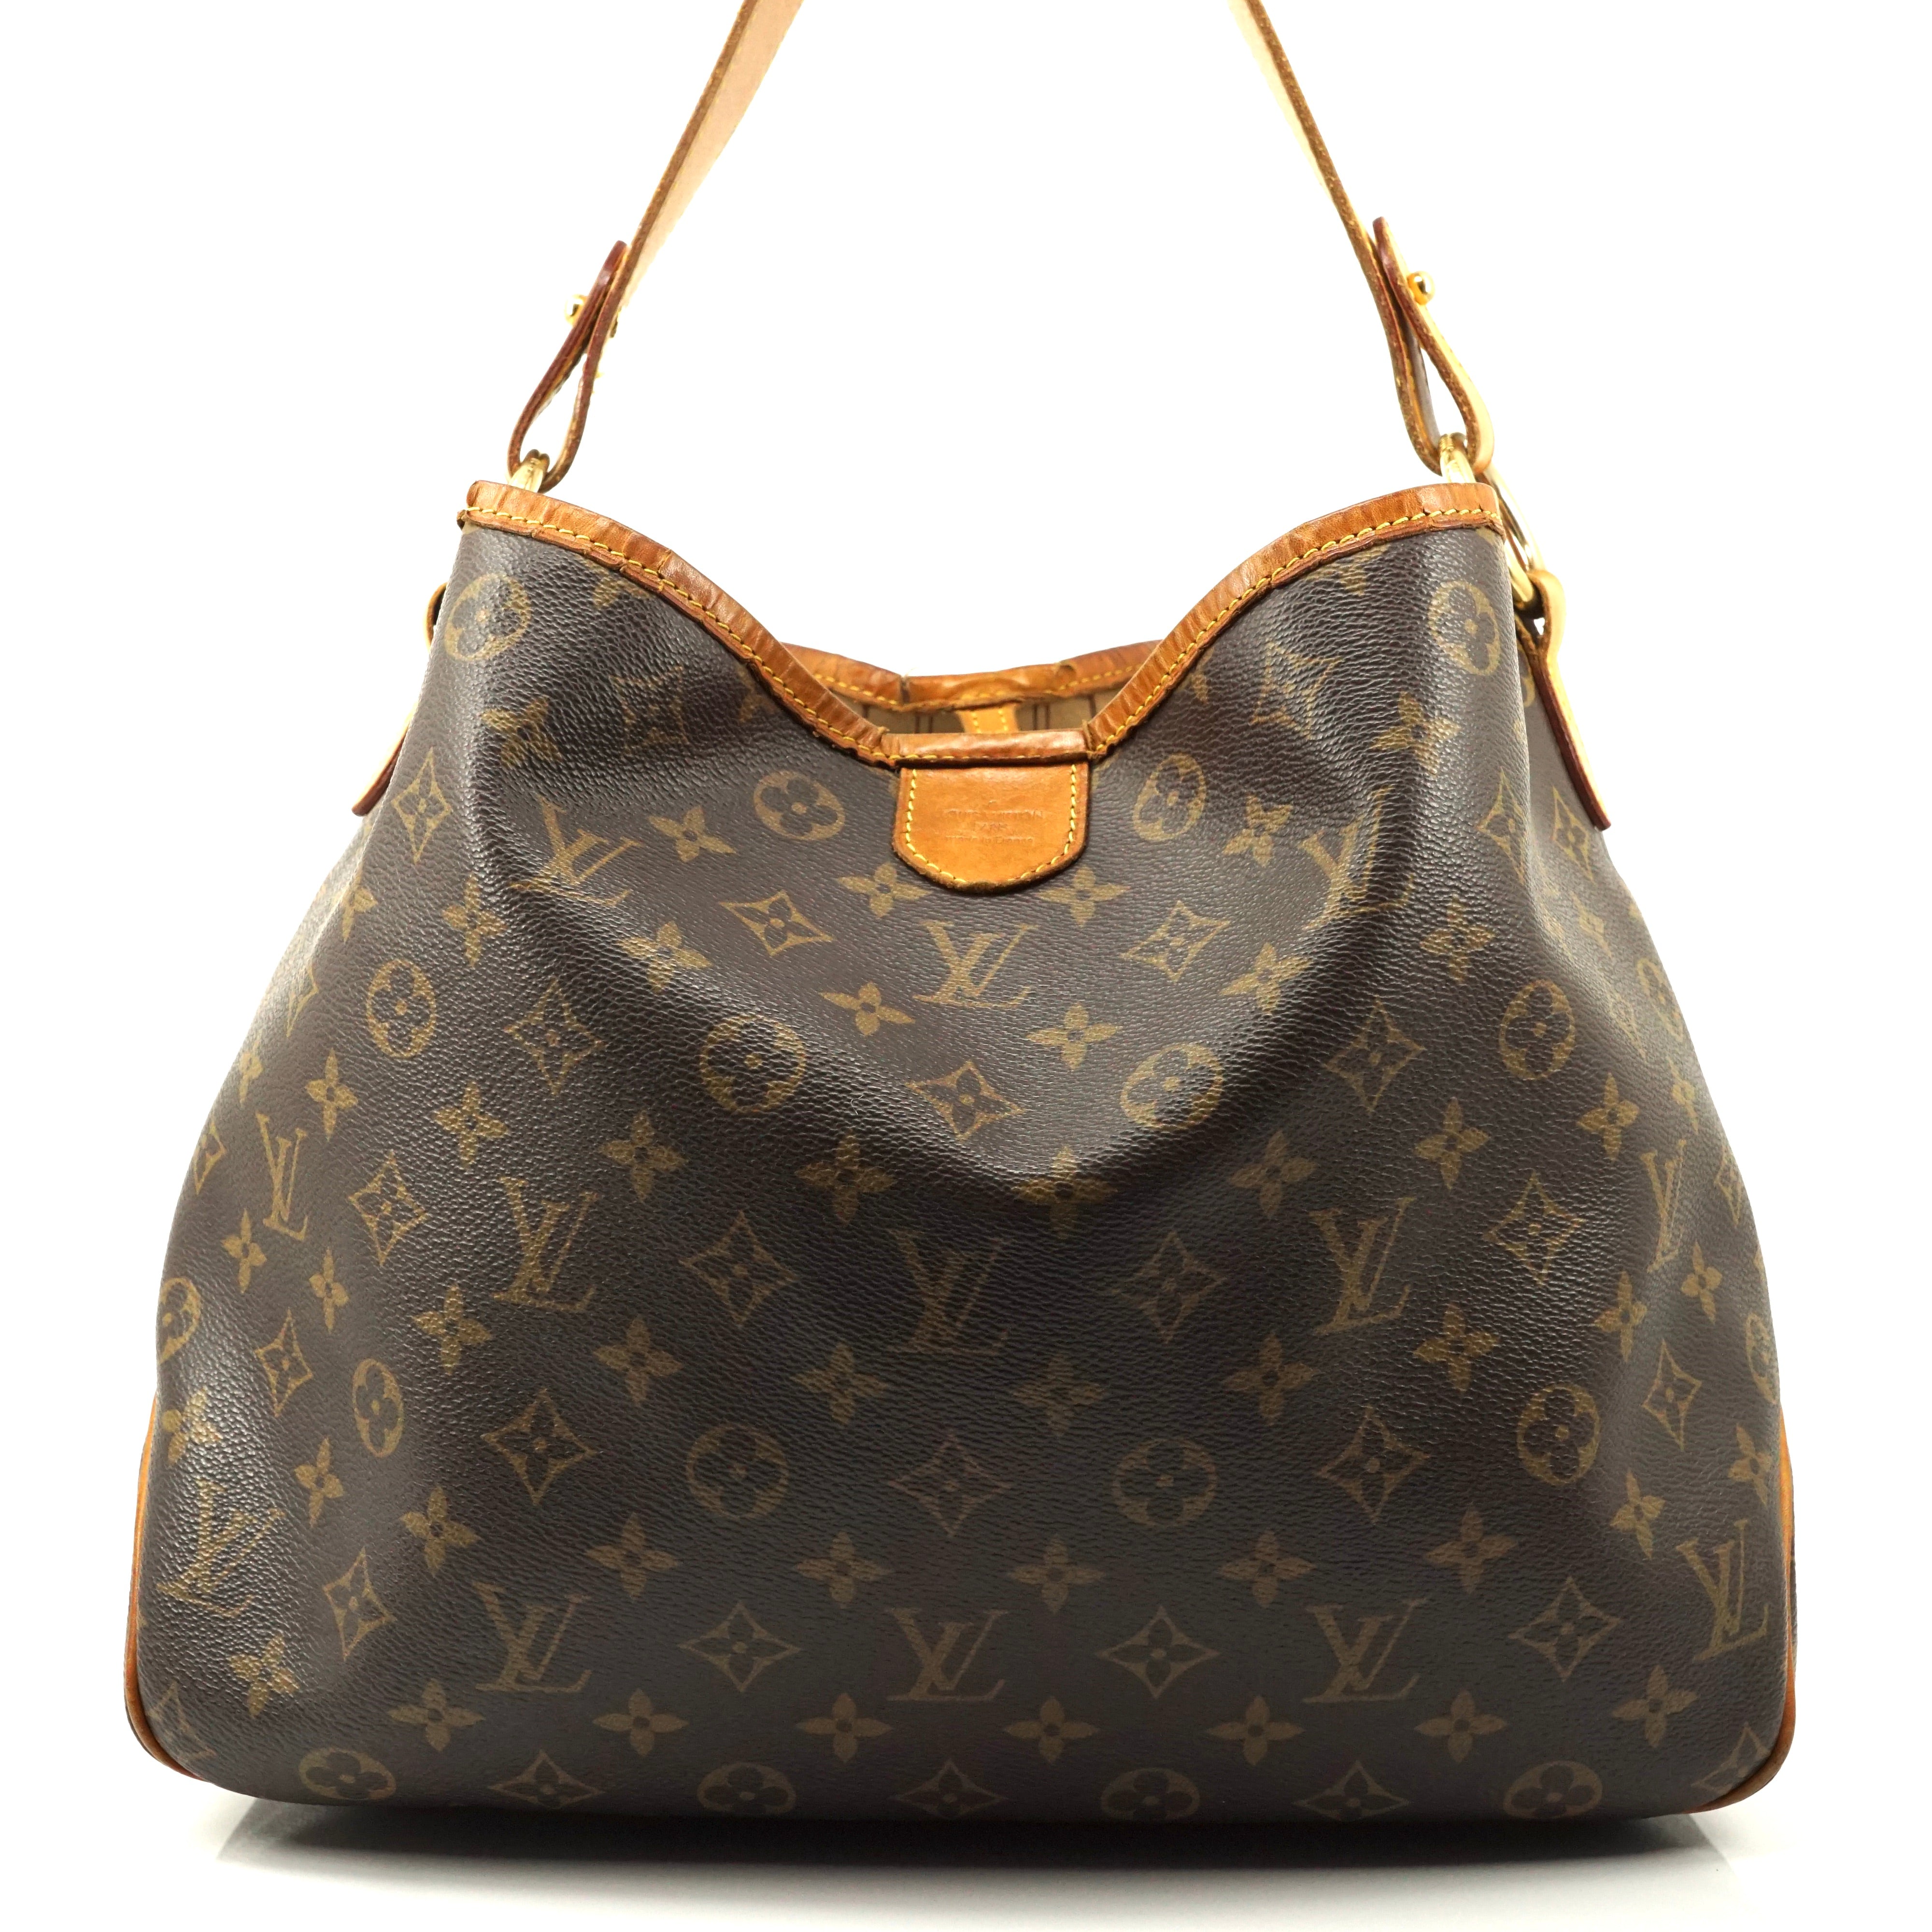 New Louis Vuitton Storage Handbag Dust Bag #21313